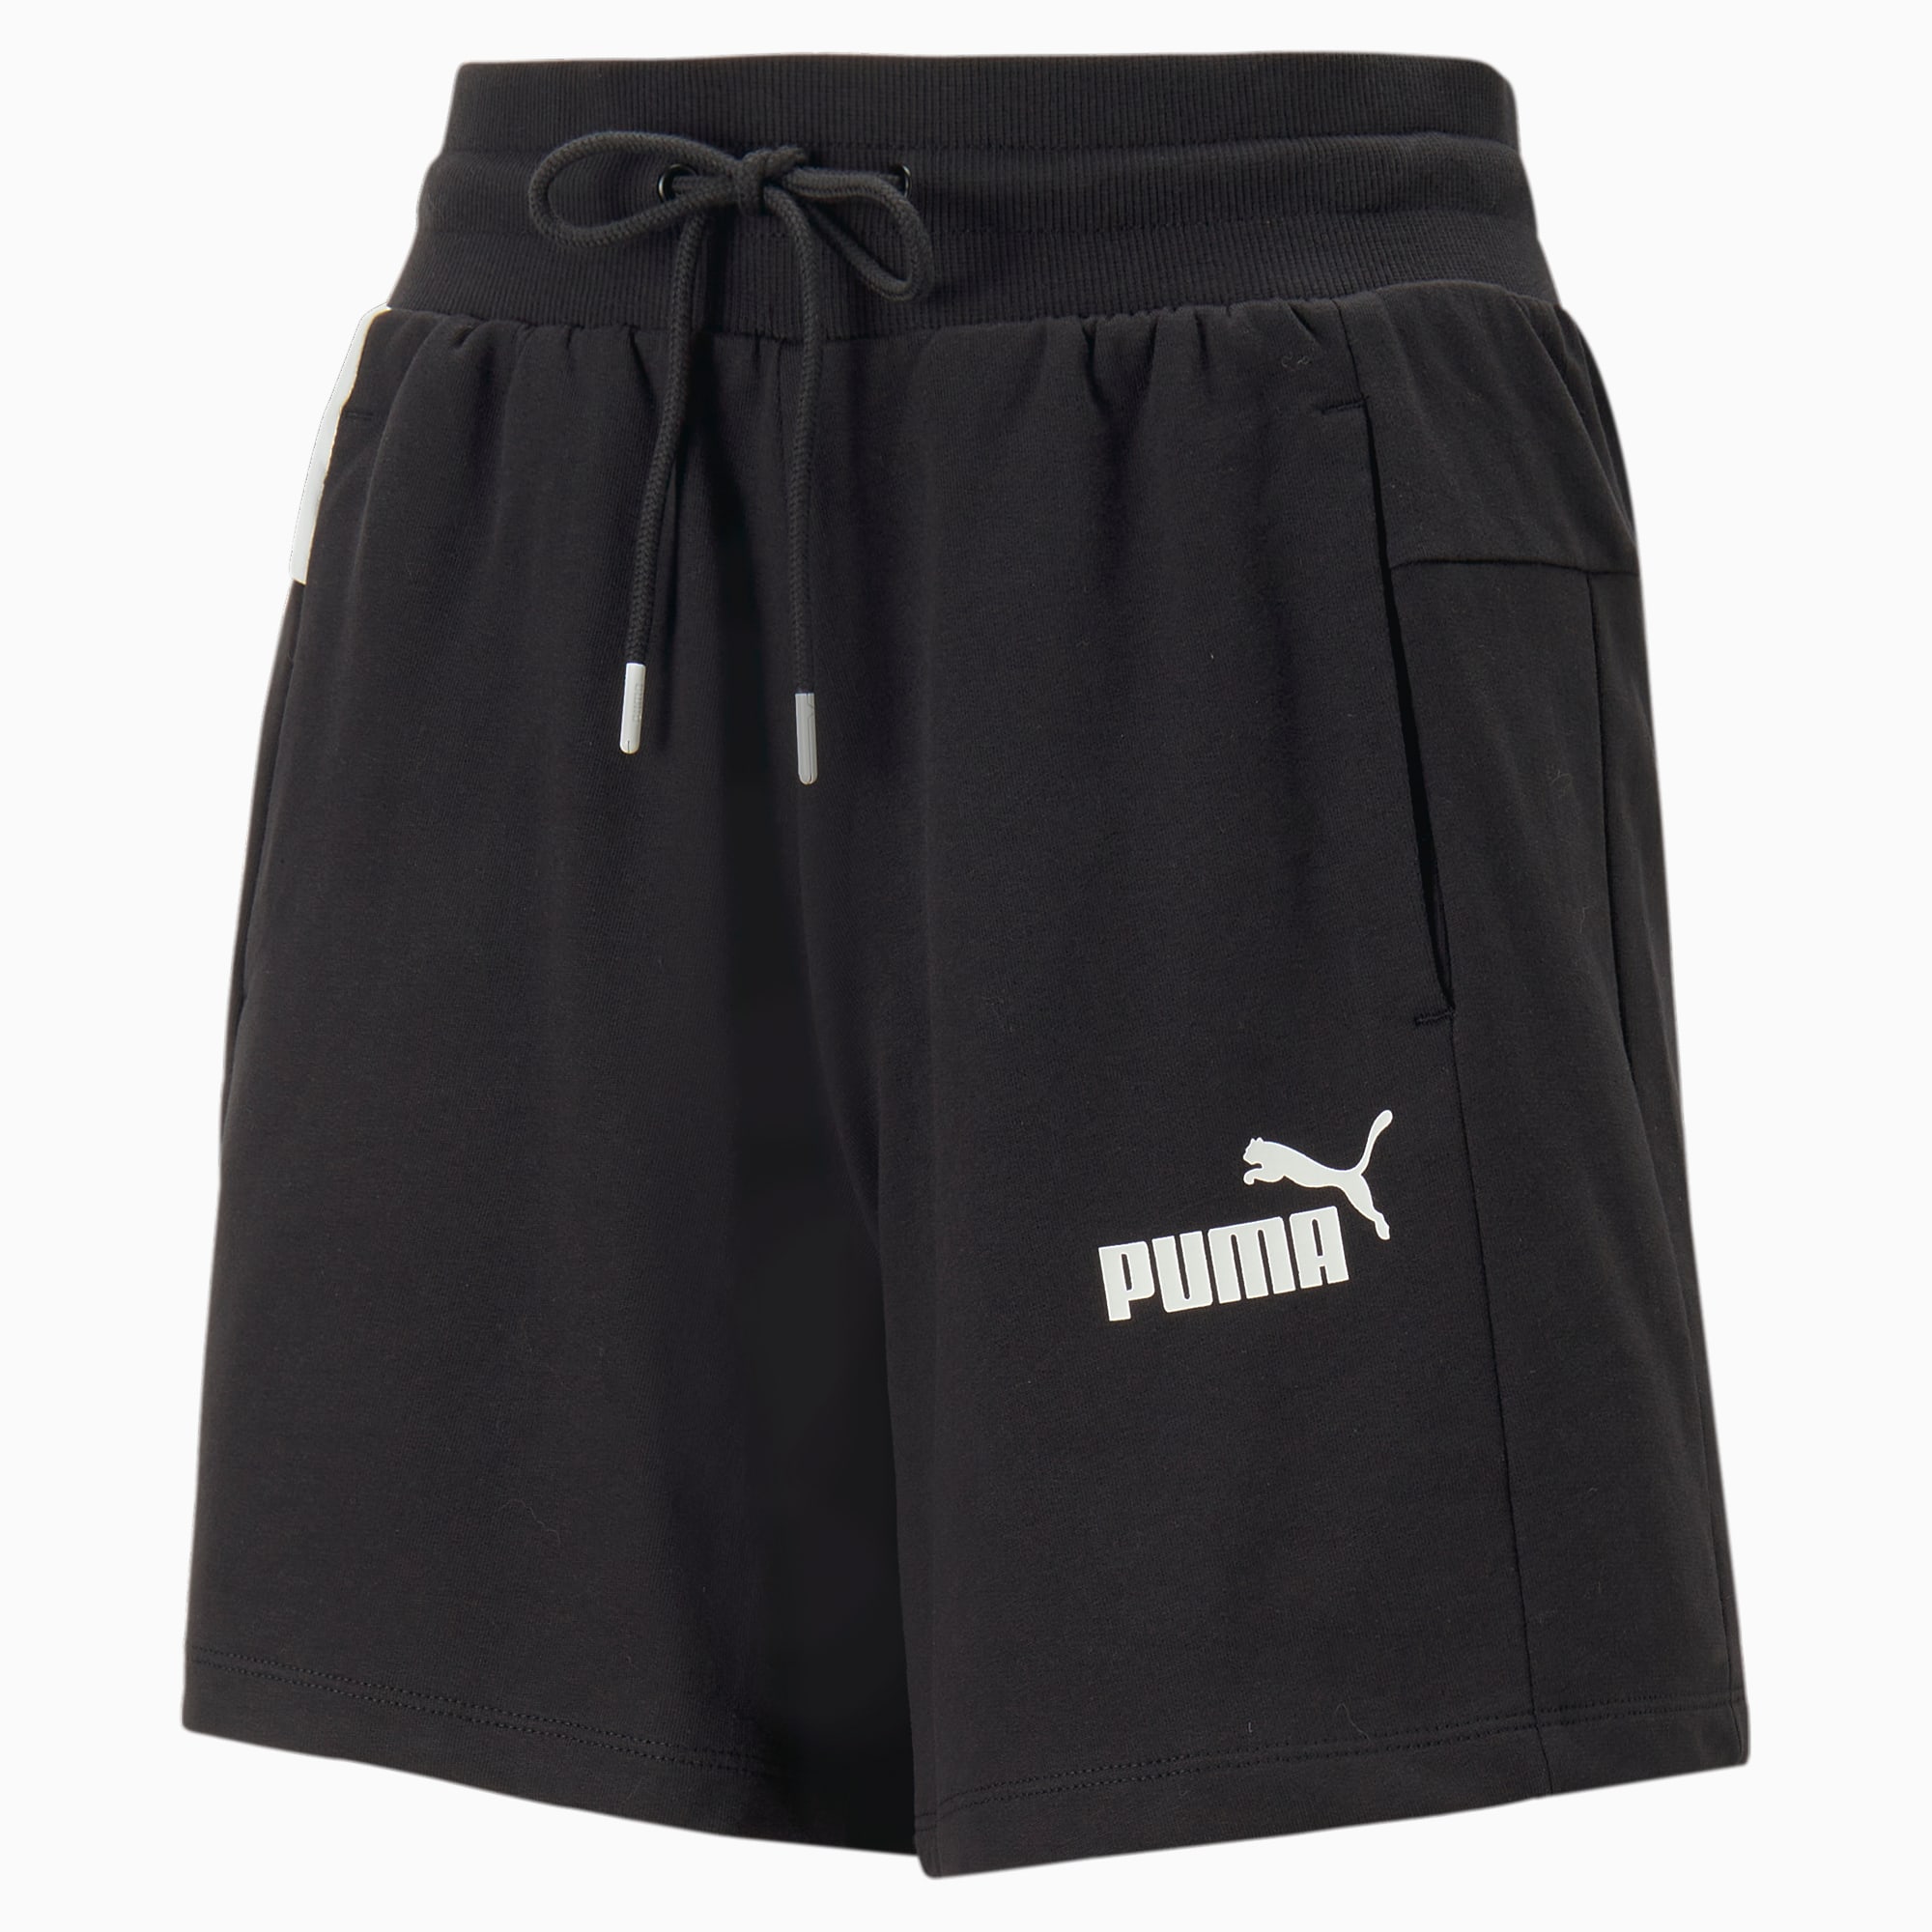 PUMA Around The Block Shorts Ft Women, Black/White, Size S, Clothing